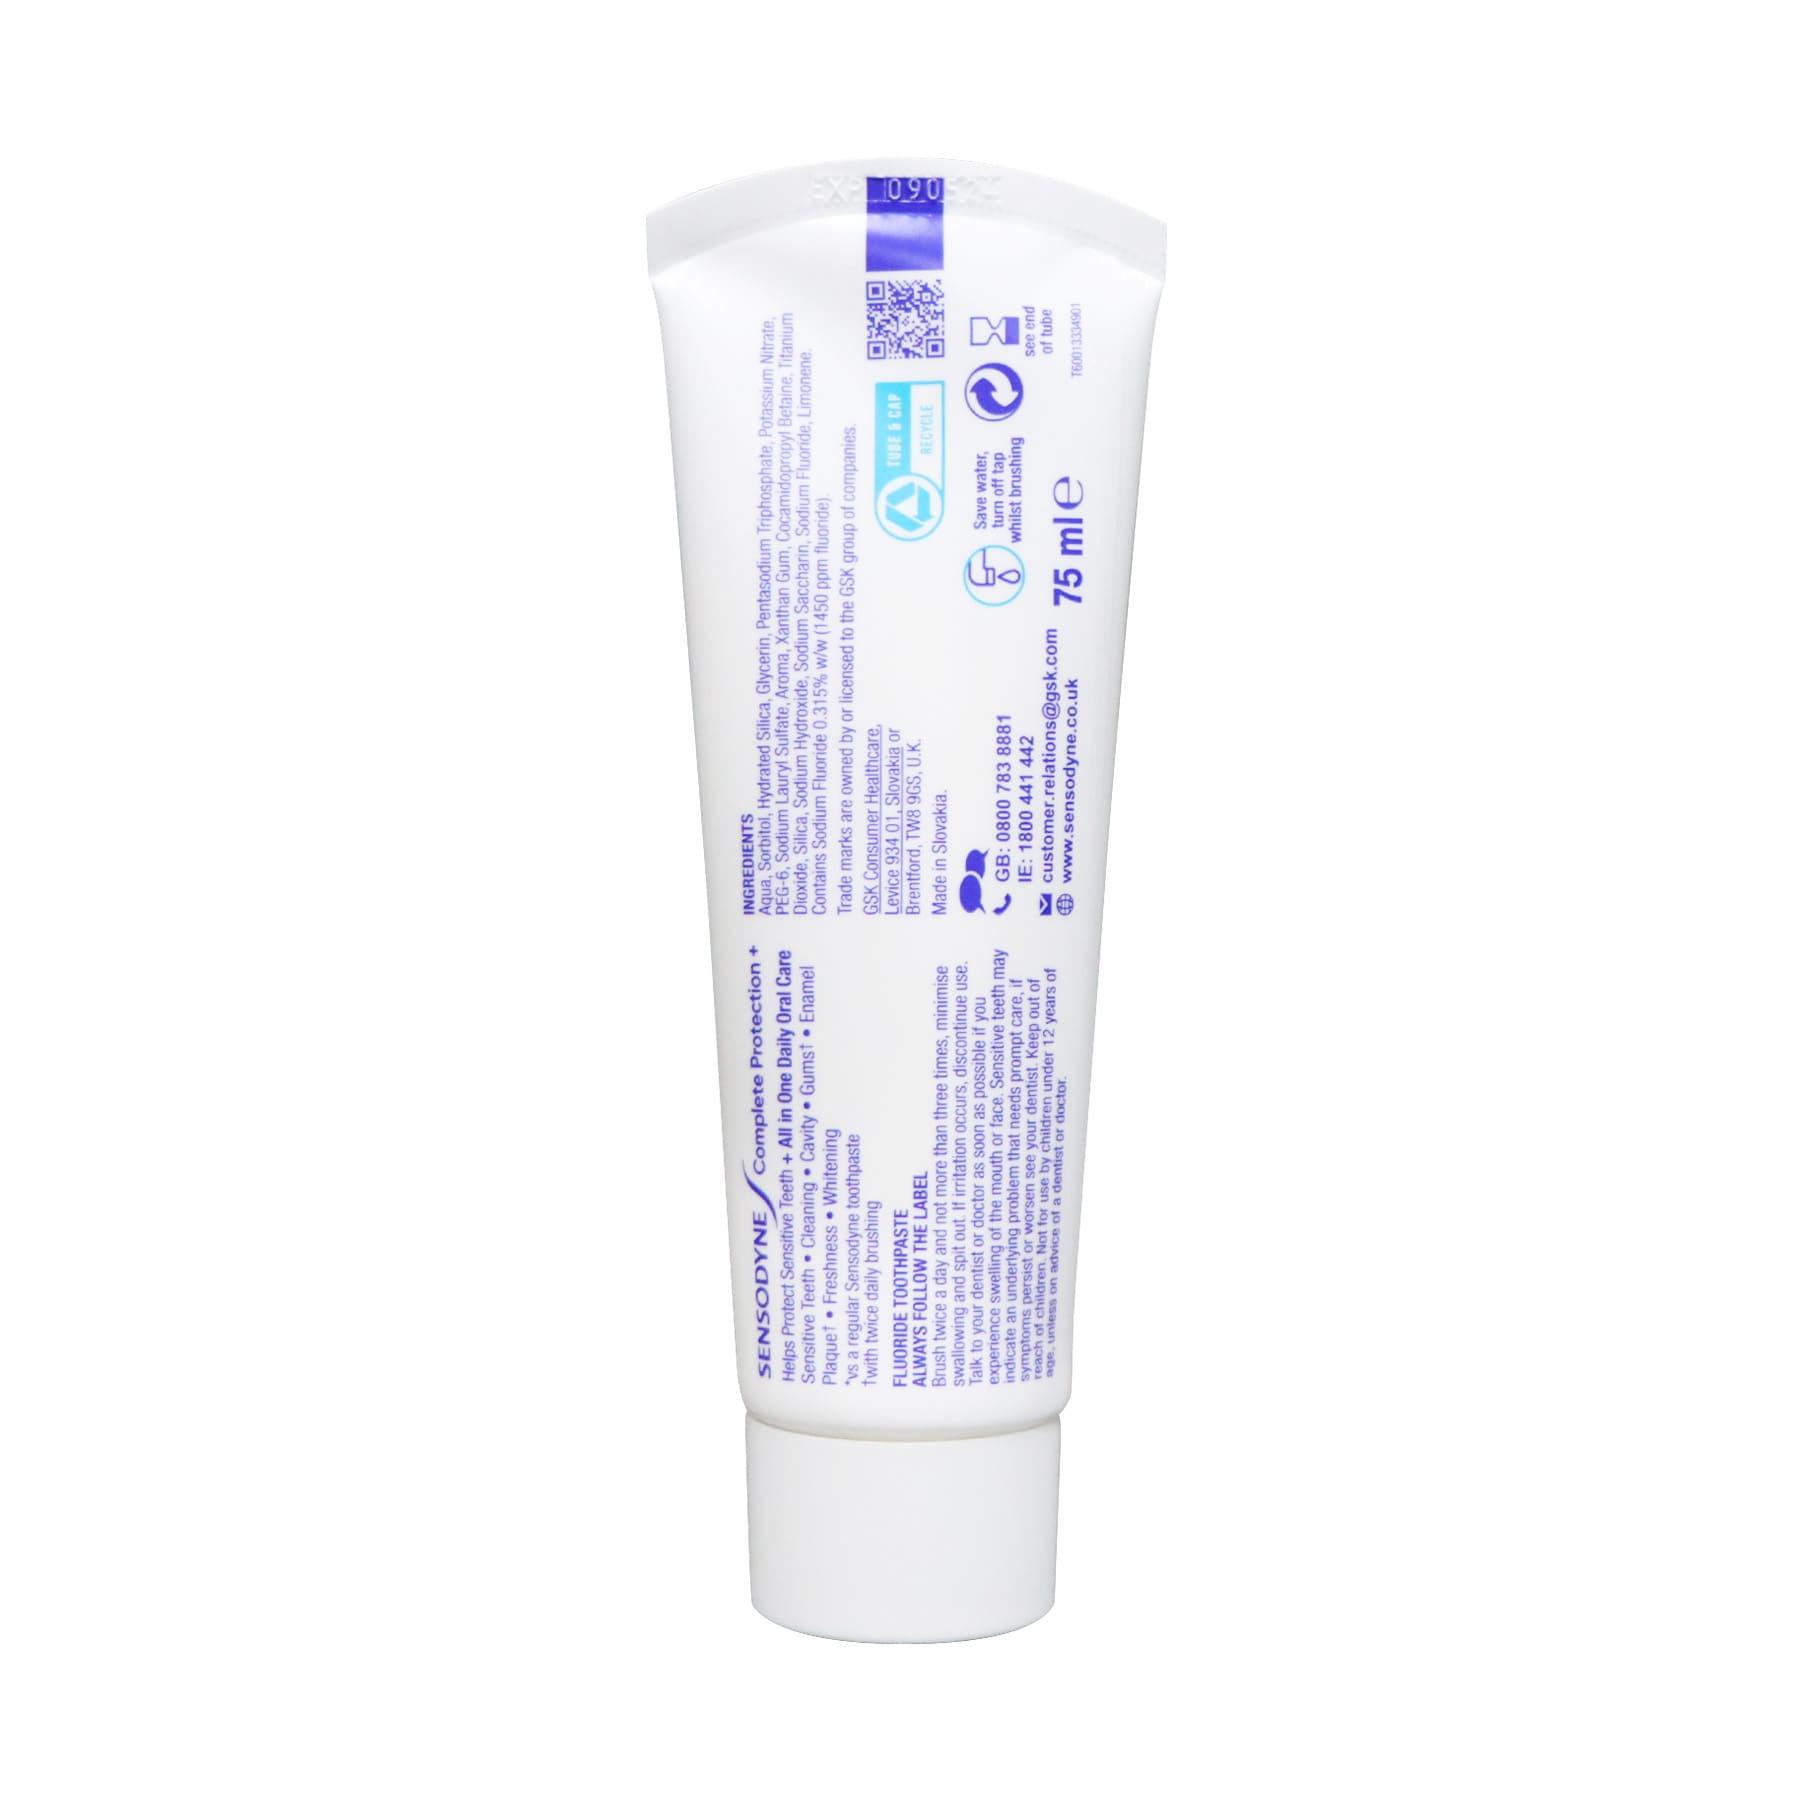 Sensodyne Complete Protection+ Original Toothpaste 75ml